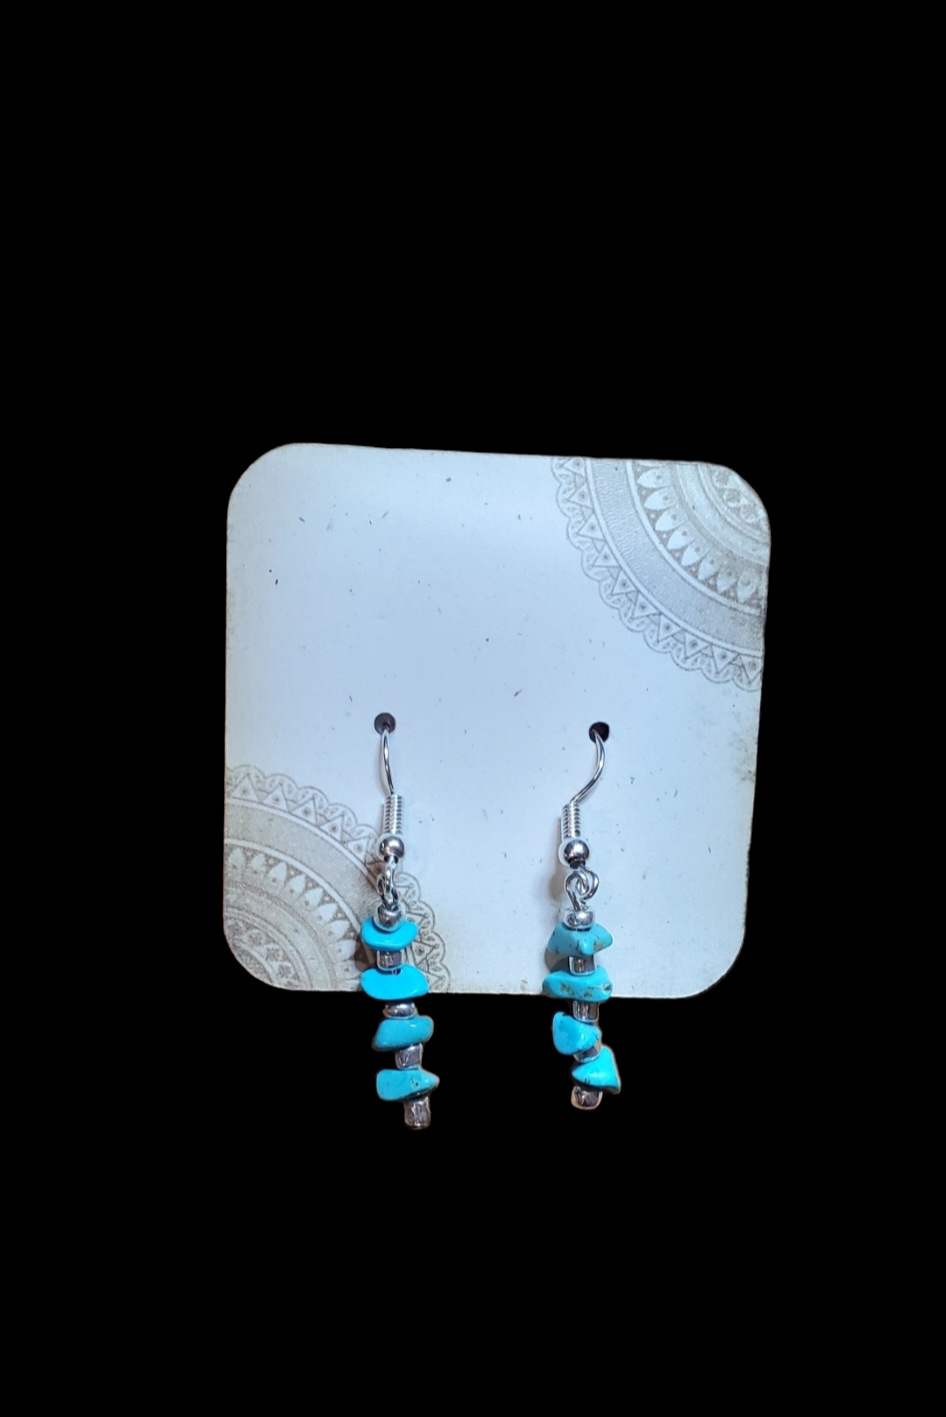 4-Stone Turquoise Earrings